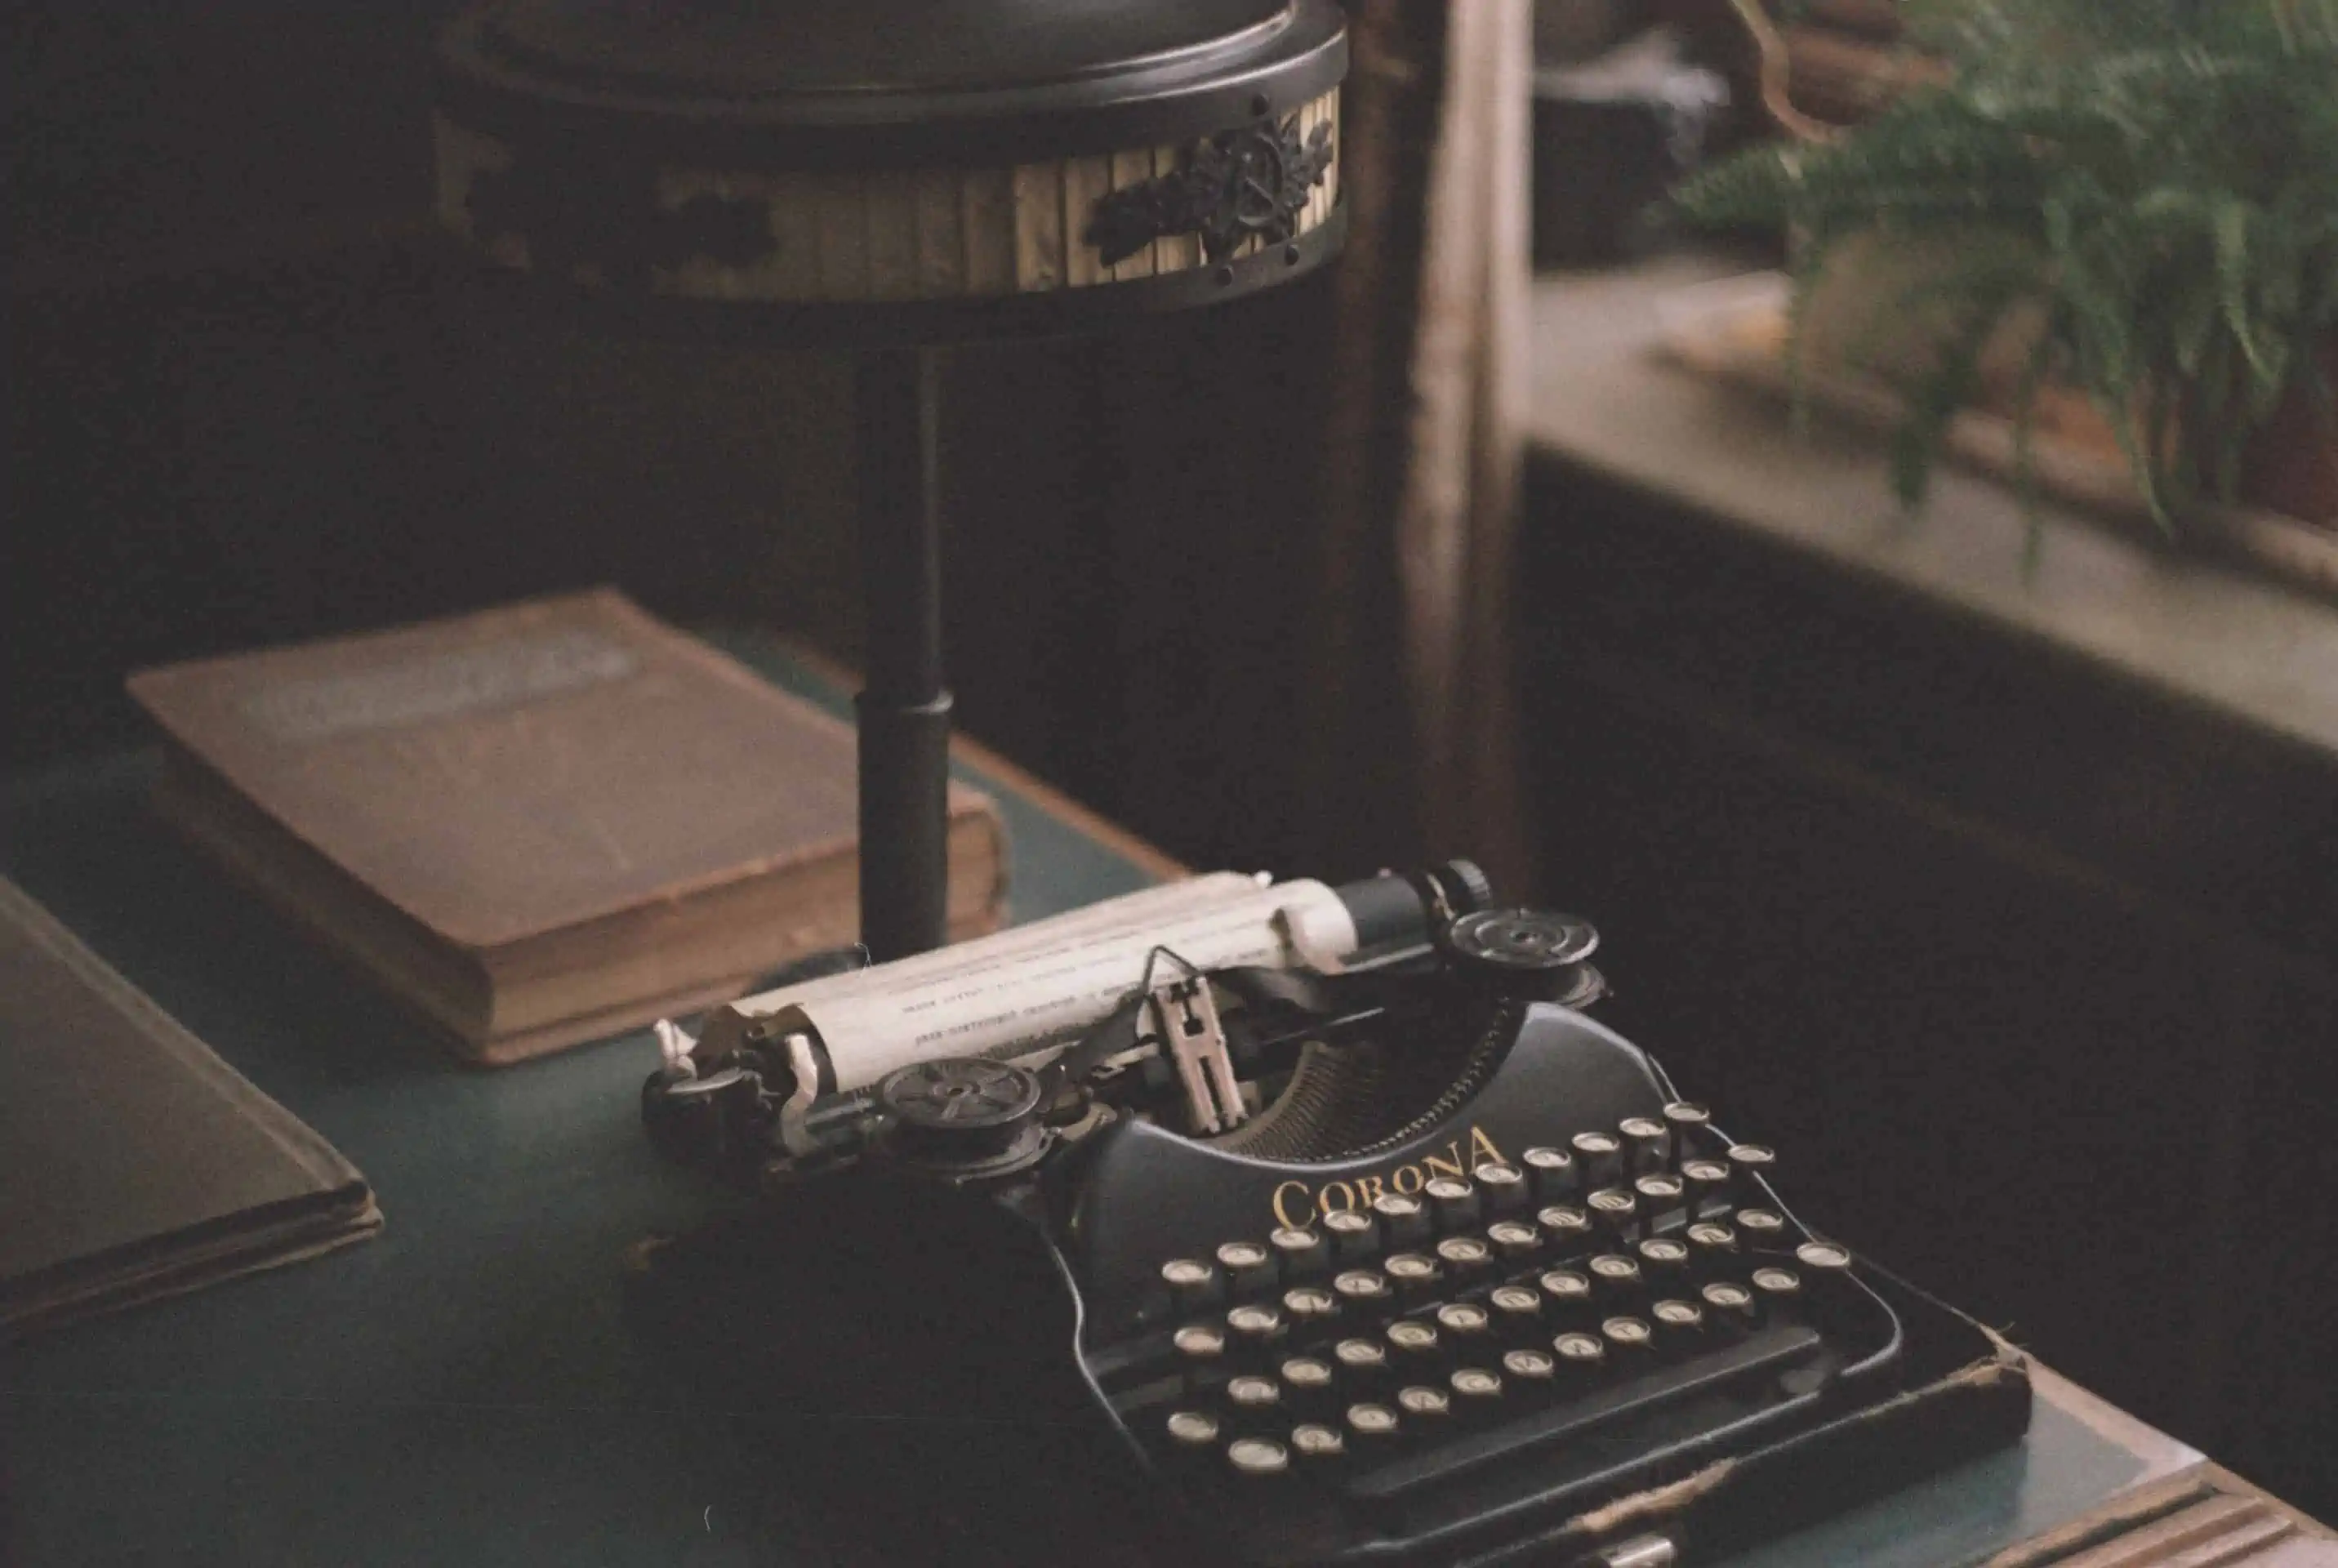 Vintage typewriter on a study table.